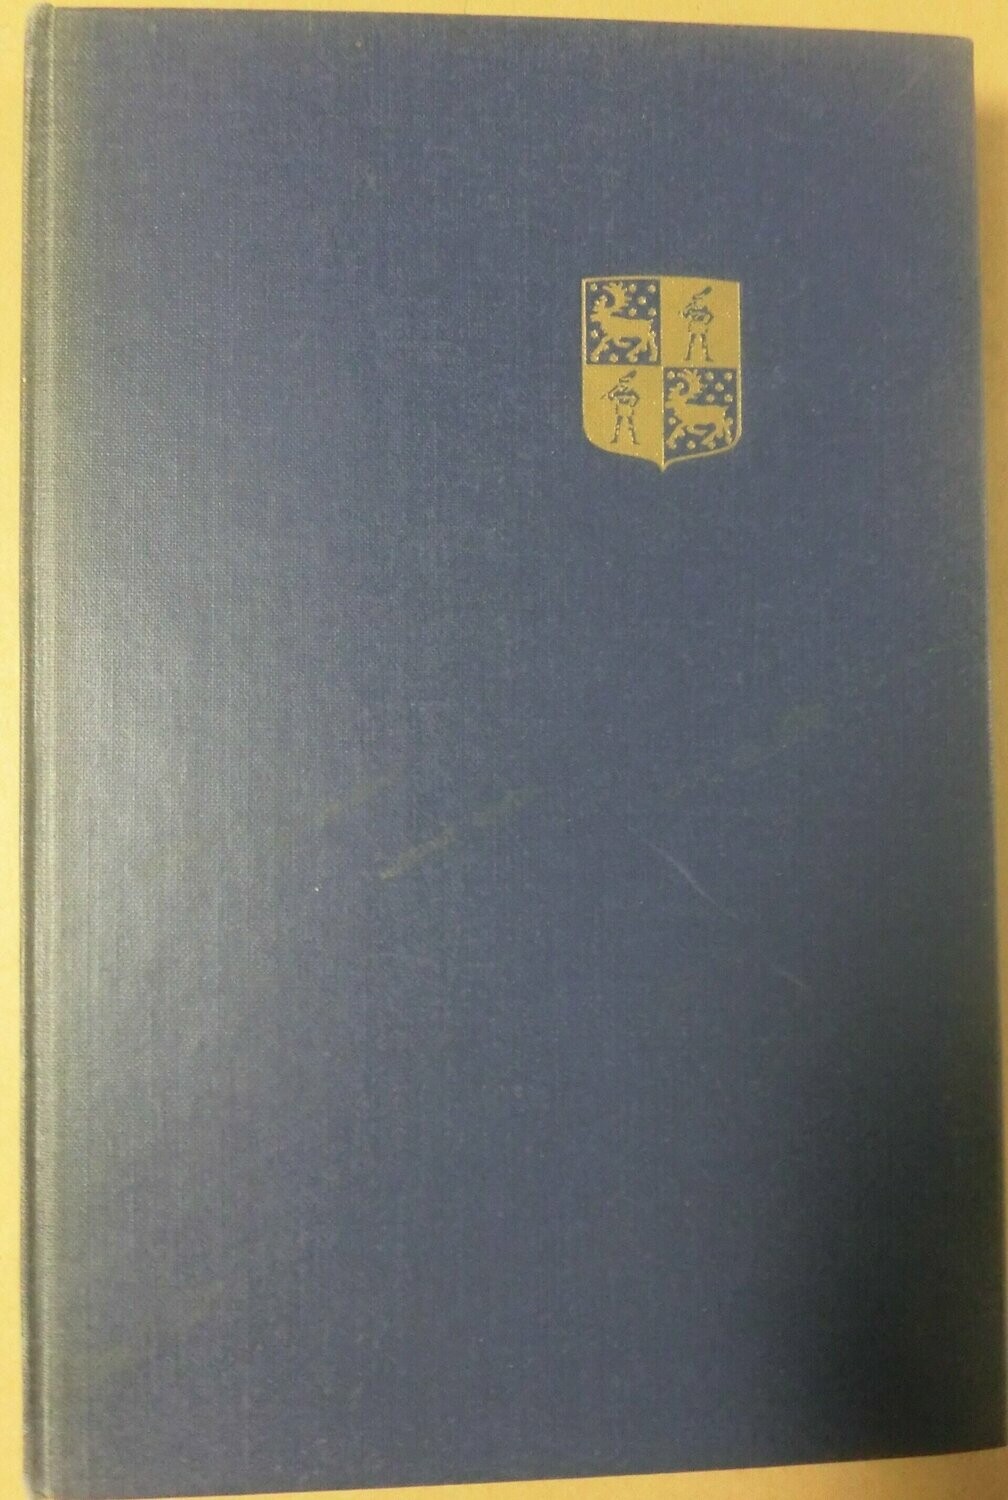 STF årsskrift 1963 - Norrbotten